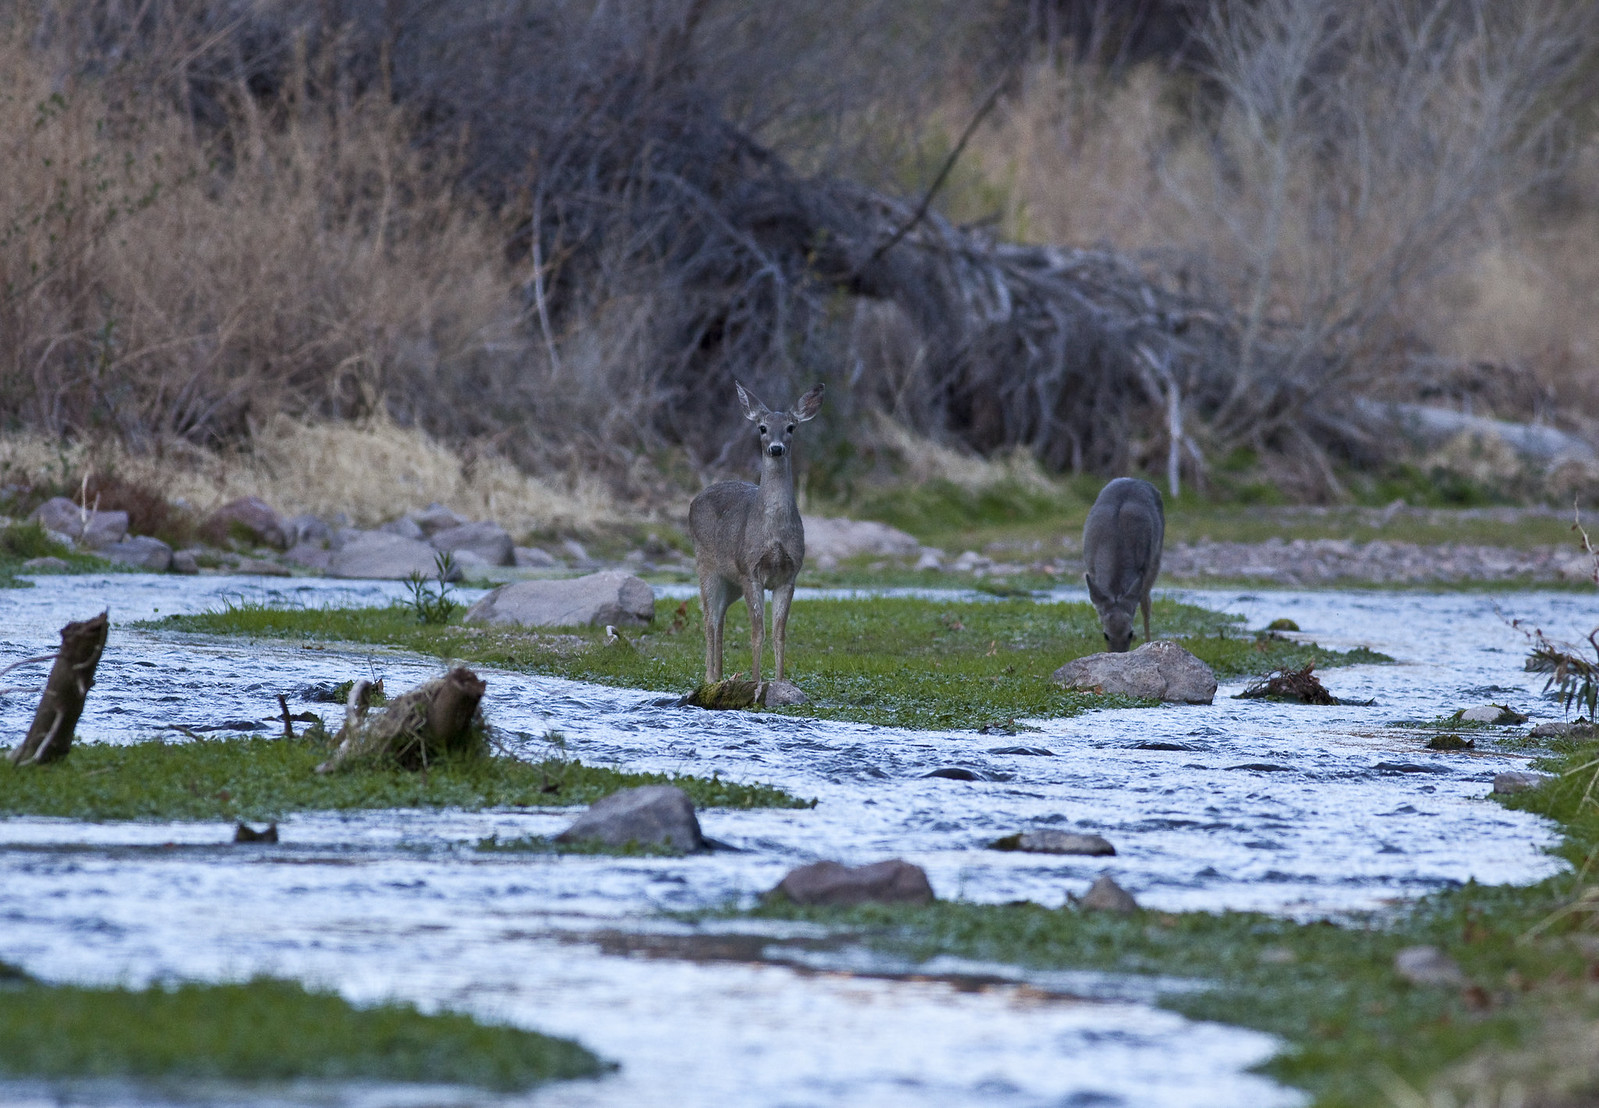 Deer in the Aravaipa Canyon Wilderness Area